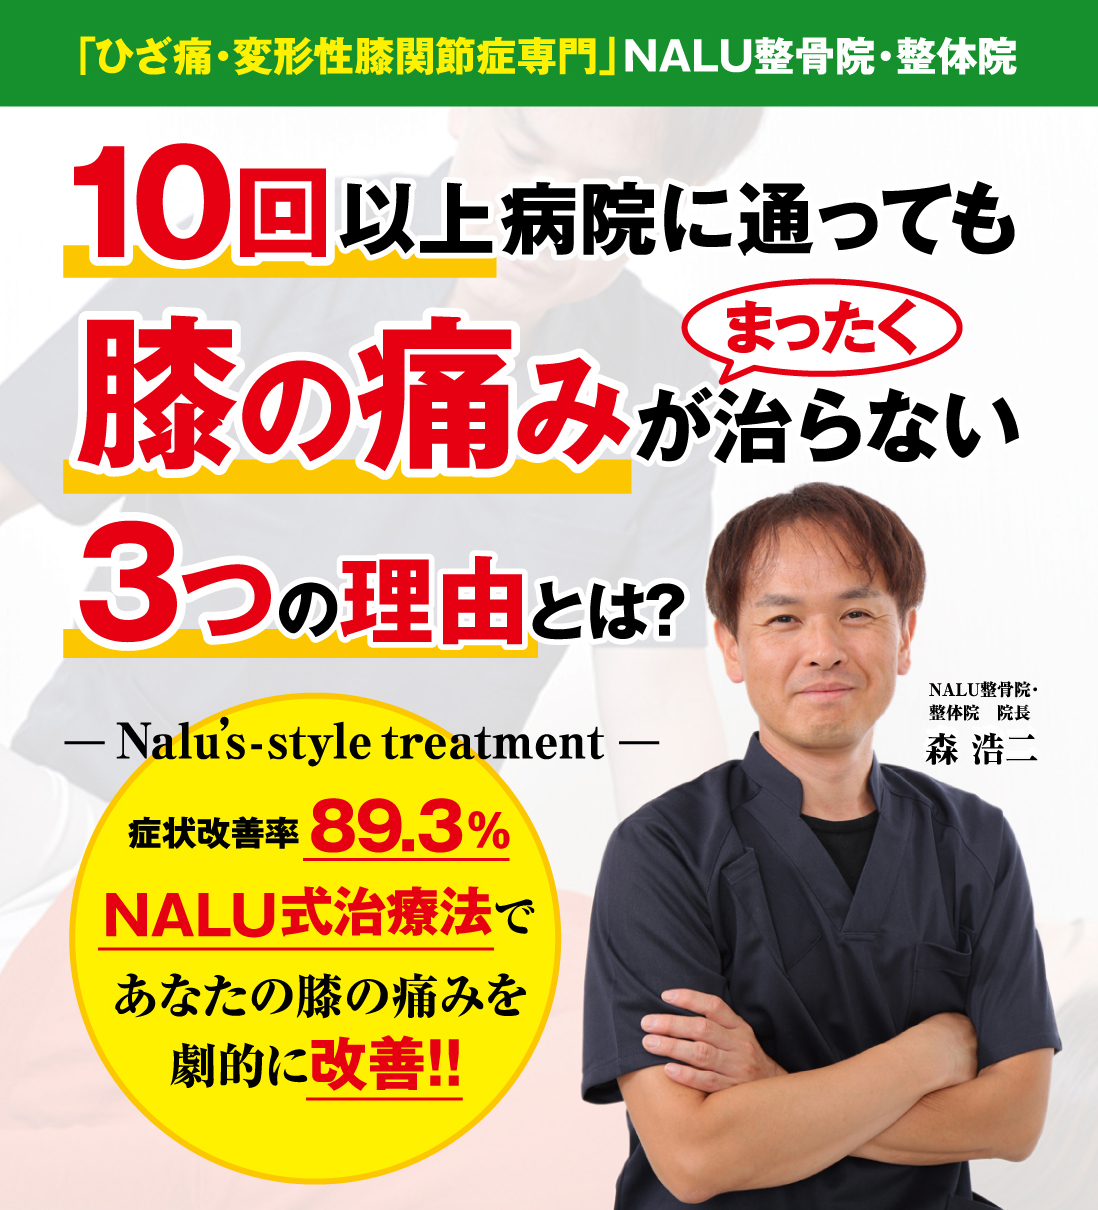 soshigaya-okura-station-4-minutes-on-foot-specialized-in-knee-pain-and-knee-osteoarthritis-nalu-osteopathic-clinic